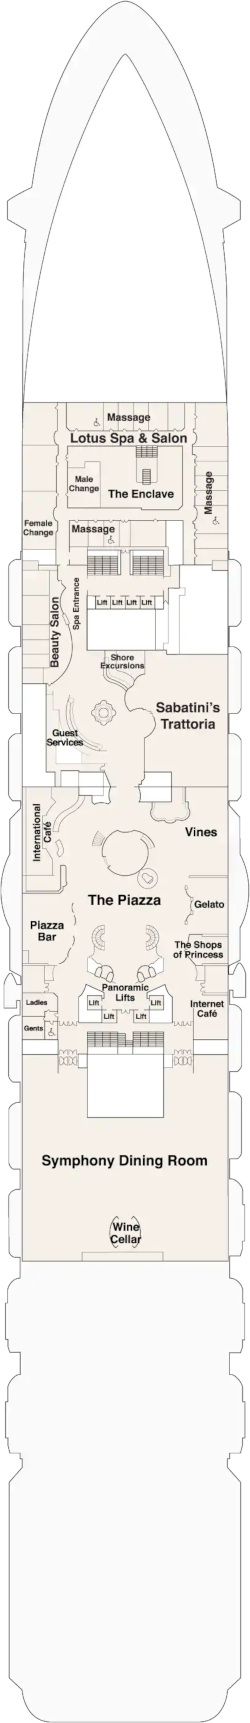 Regal Princess Plaza Deck Deck Plan